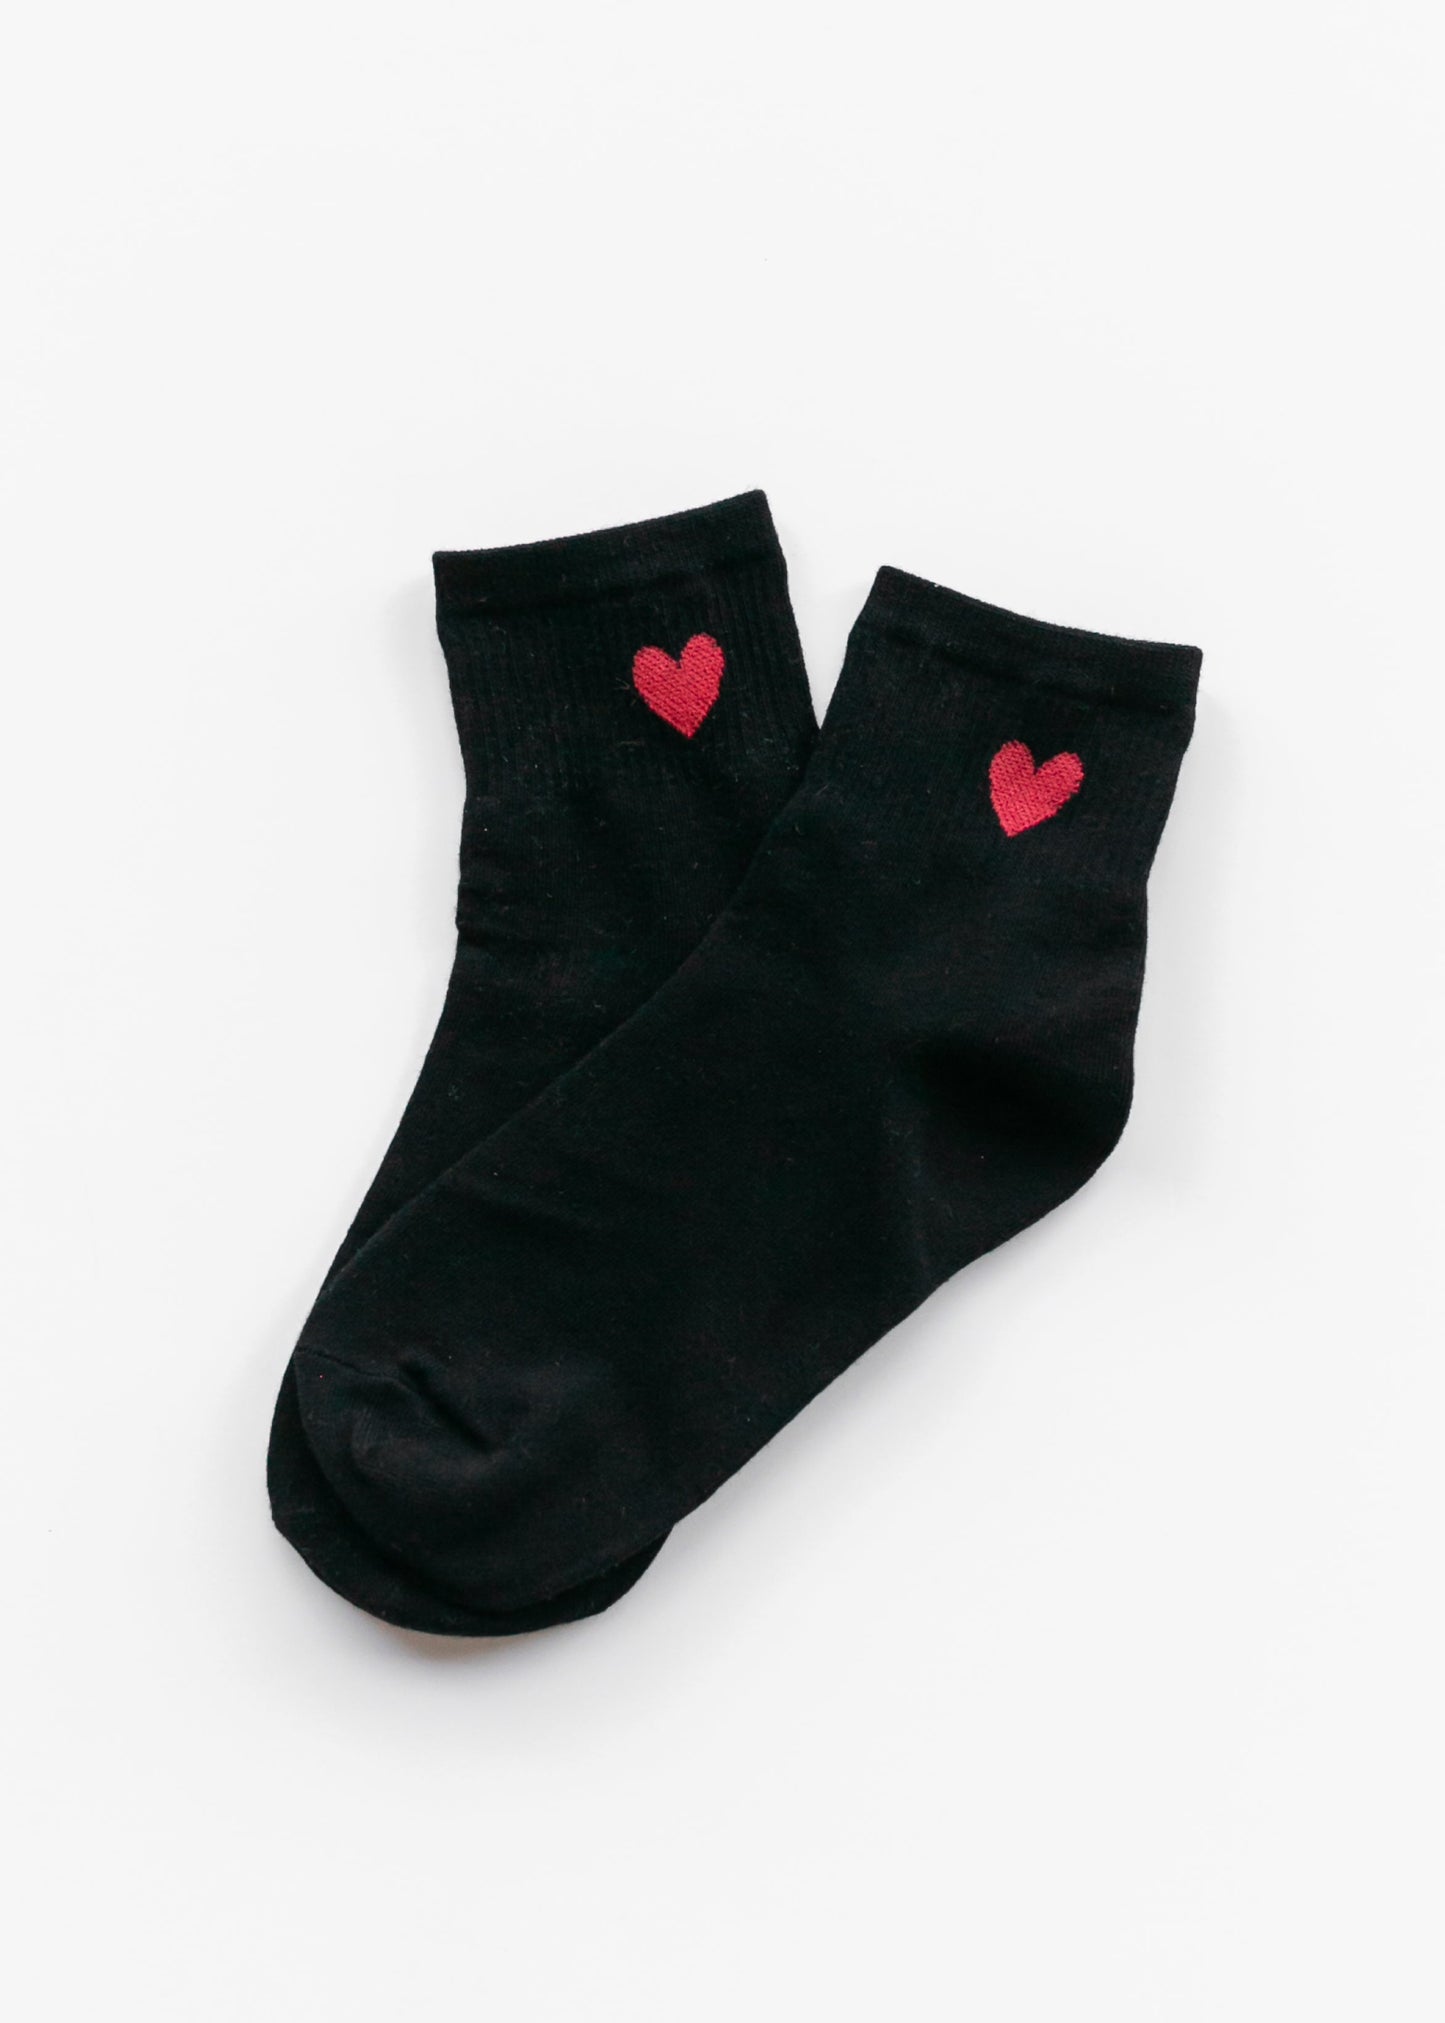 Heart Printed Ankle Socks Accessories Black